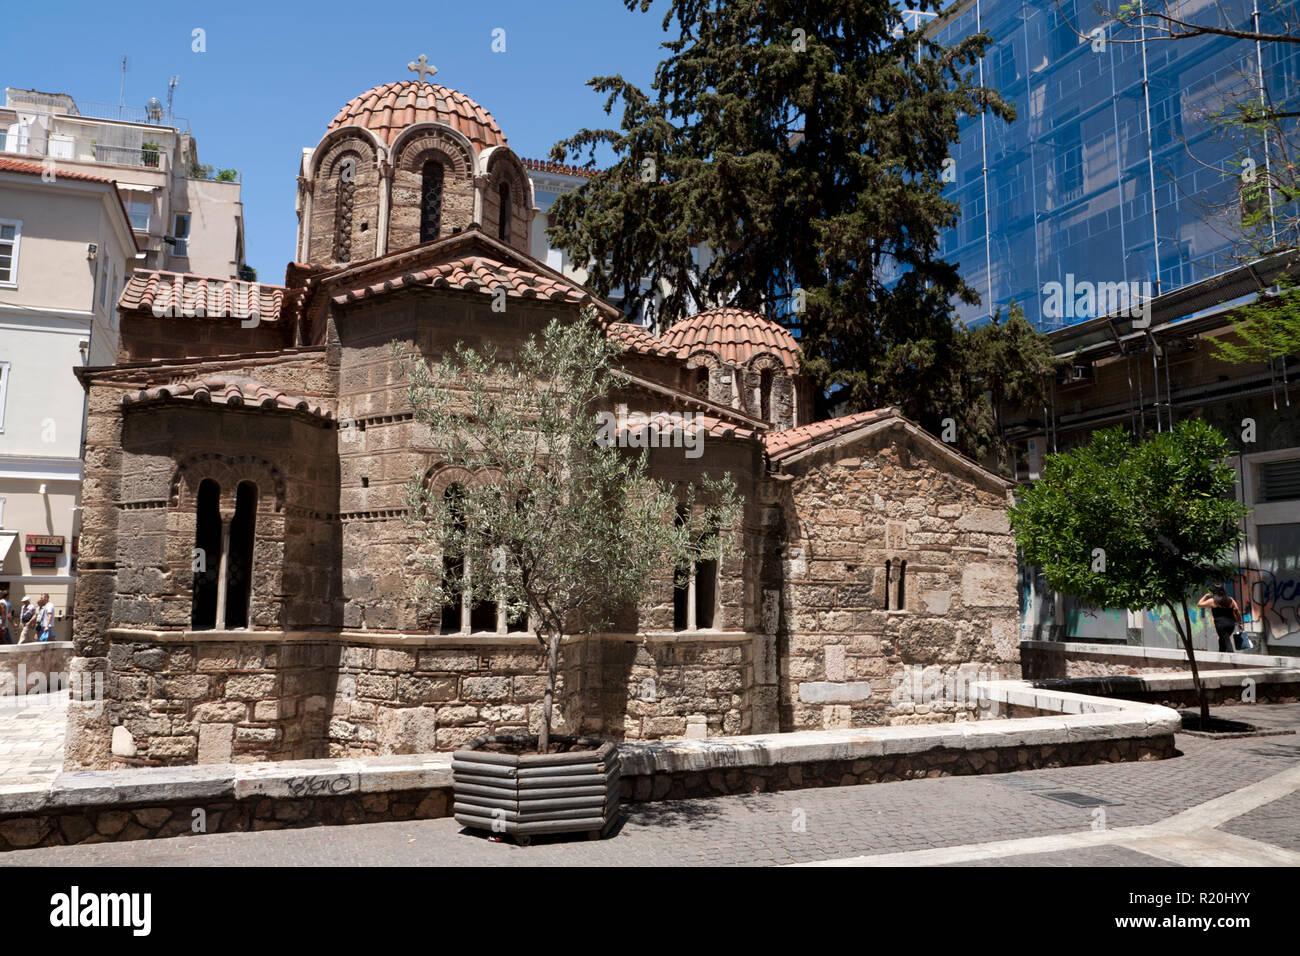 La chiesa di Panaghia kapnikarea plateia kapnikareas manastiraki Atene GRECIA Foto Stock